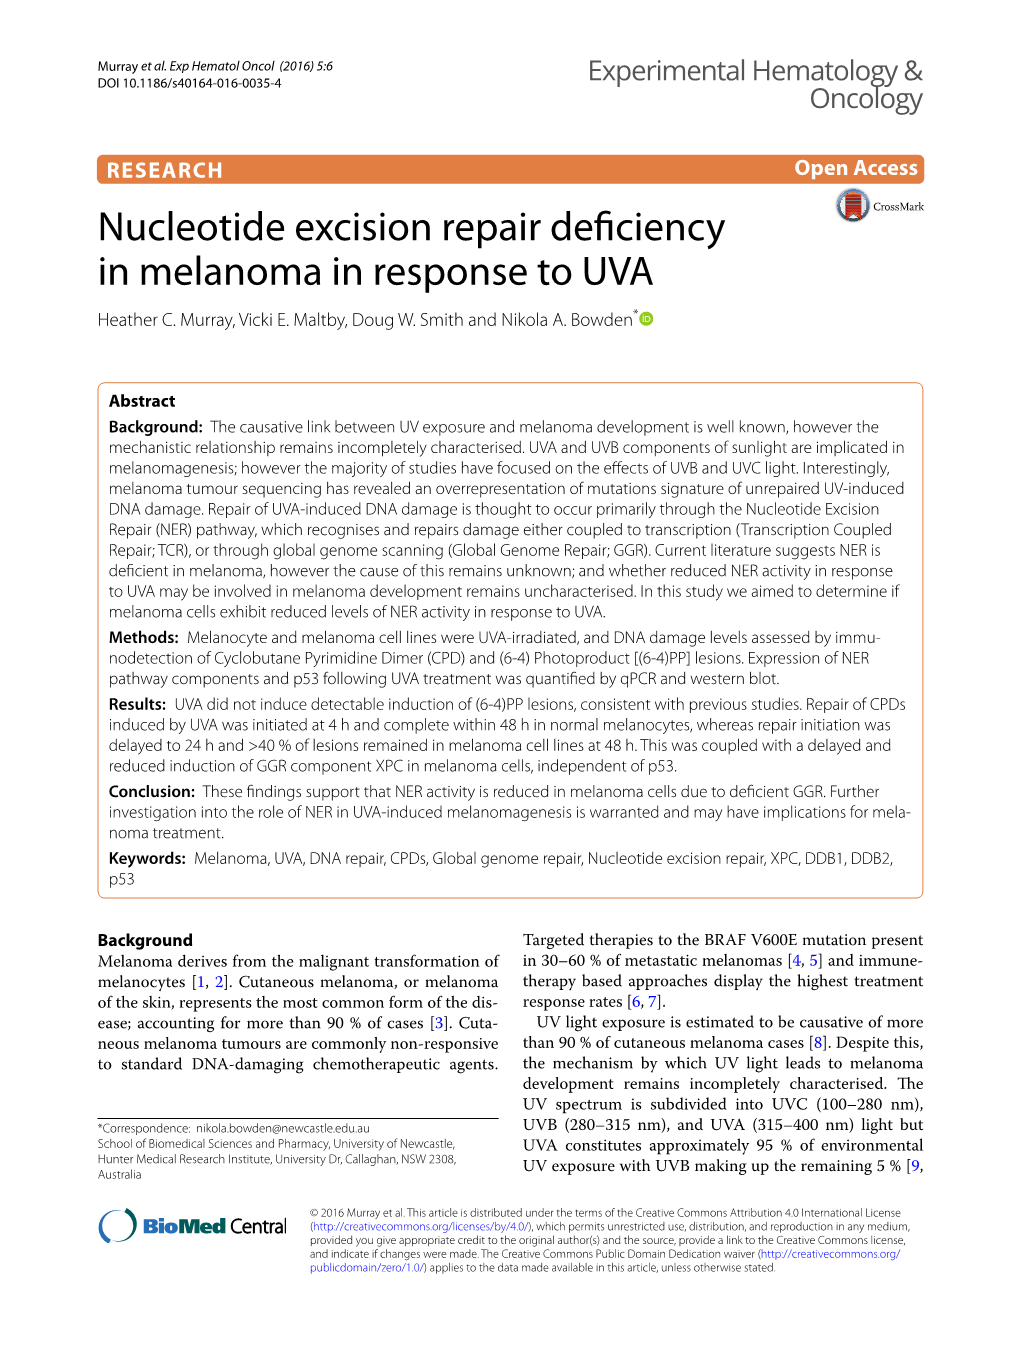 Nucleotide Excision Repair Deficiency in Melanoma in Response to UVA Heather C